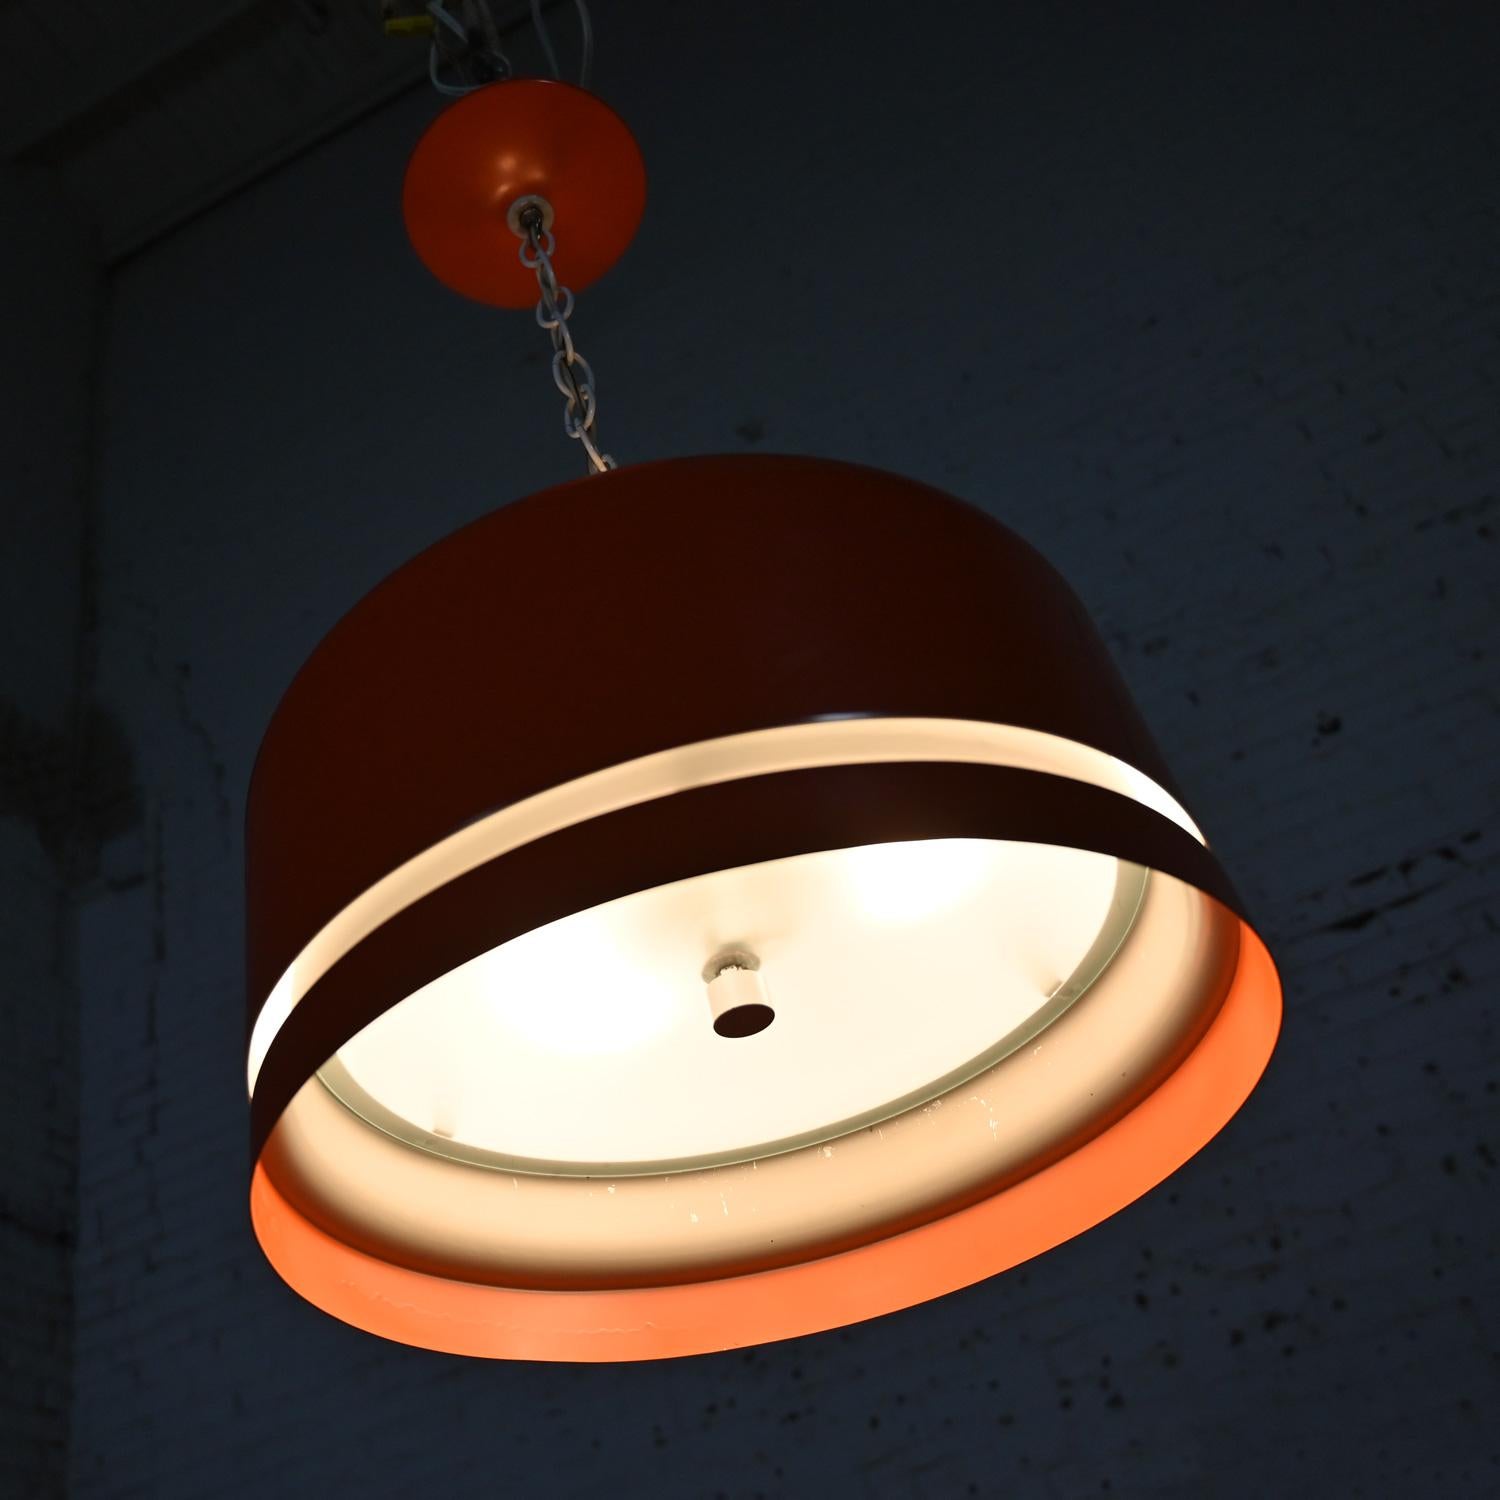 Mid Century Modern Orange Dome Pendant Hanging Light Fixture by Lightolier For Sale 6